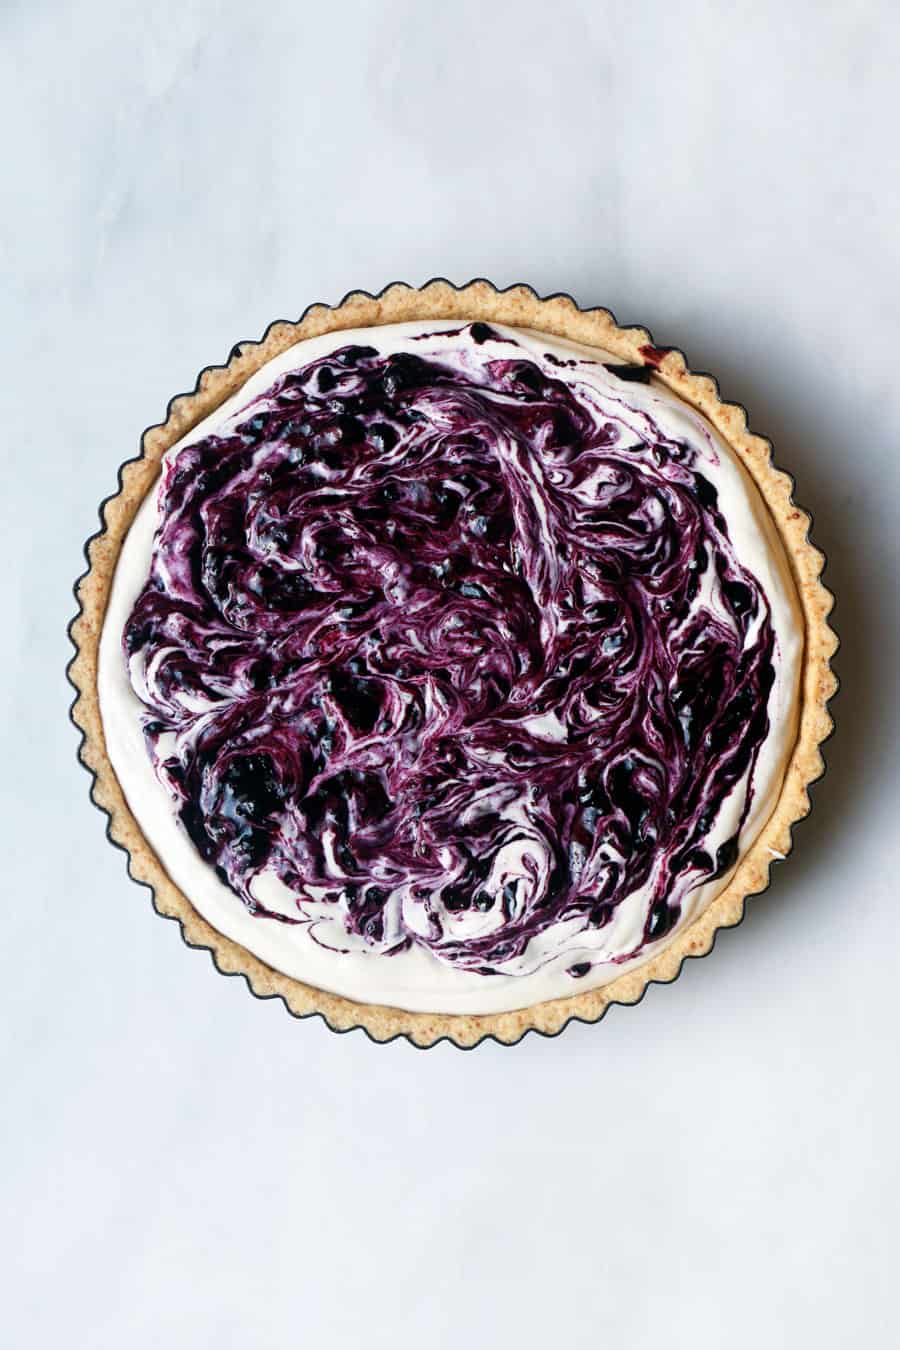 Baked Blueberry Cheesecake (vegan & gluten-free)